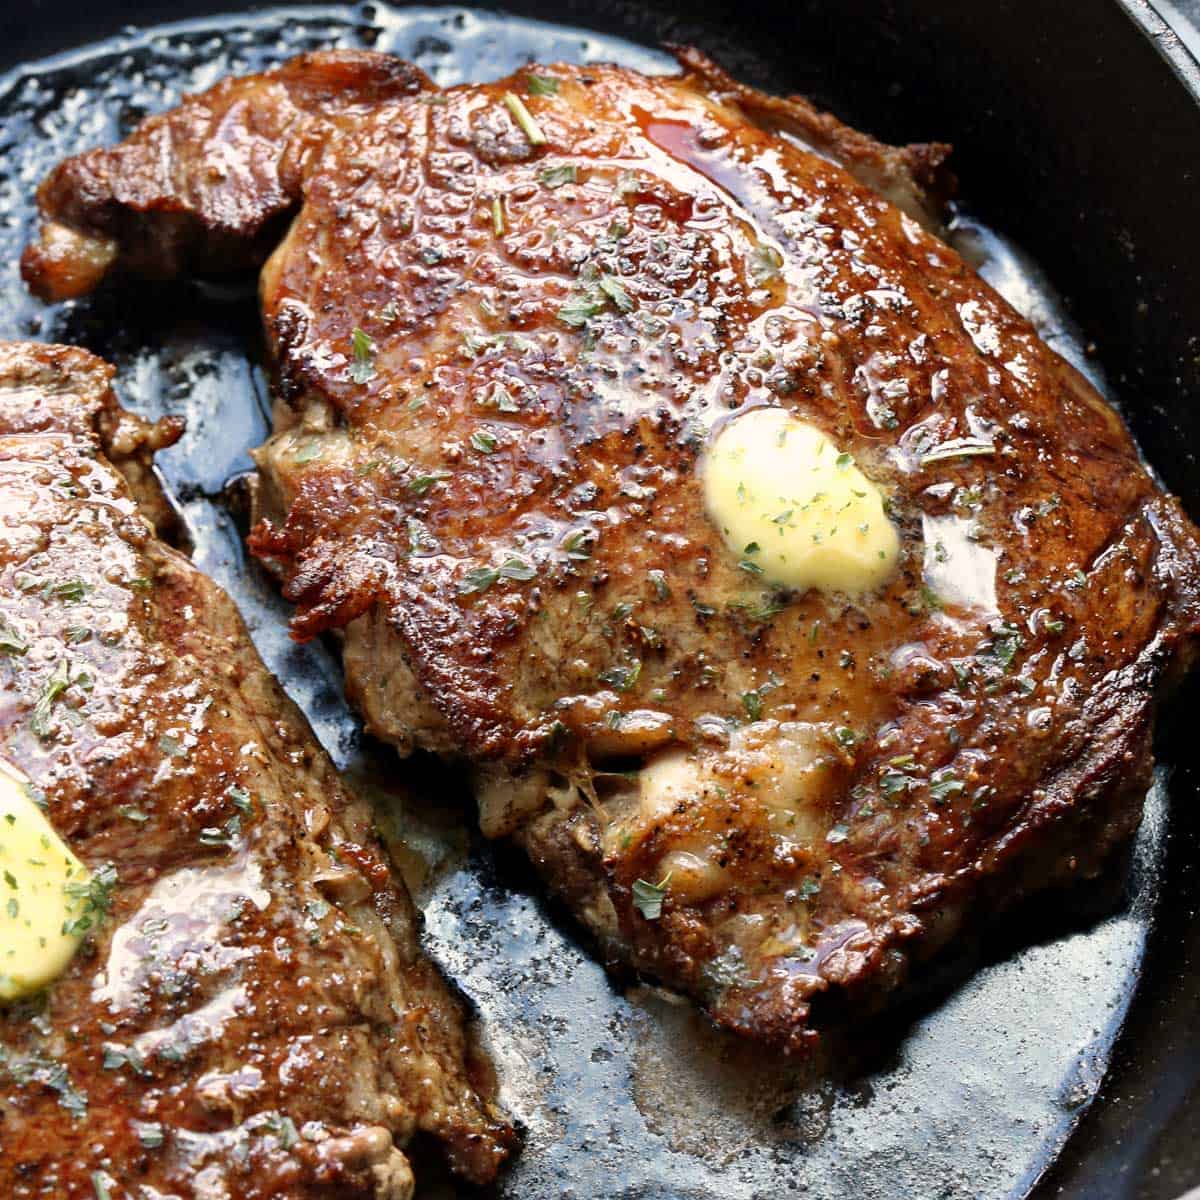 https://healthyrecipesblogs.com/wp-content/uploads/2022/09/ribeye-steak-featured-1.jpg